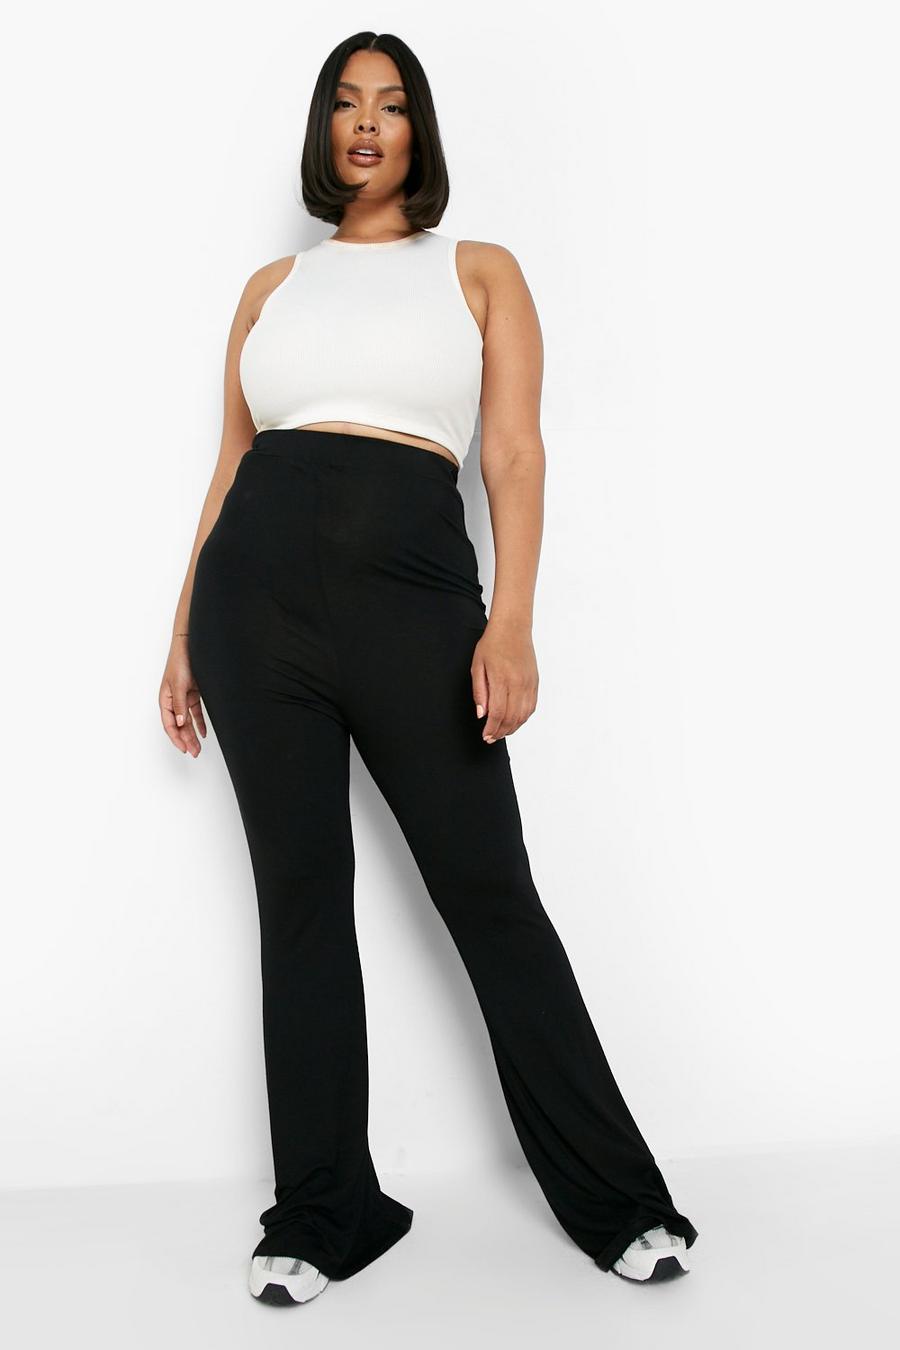 Black nero מכנסיים מתרחבים בייסיק high waist צמודים בחלק העליון, מידות גדולות